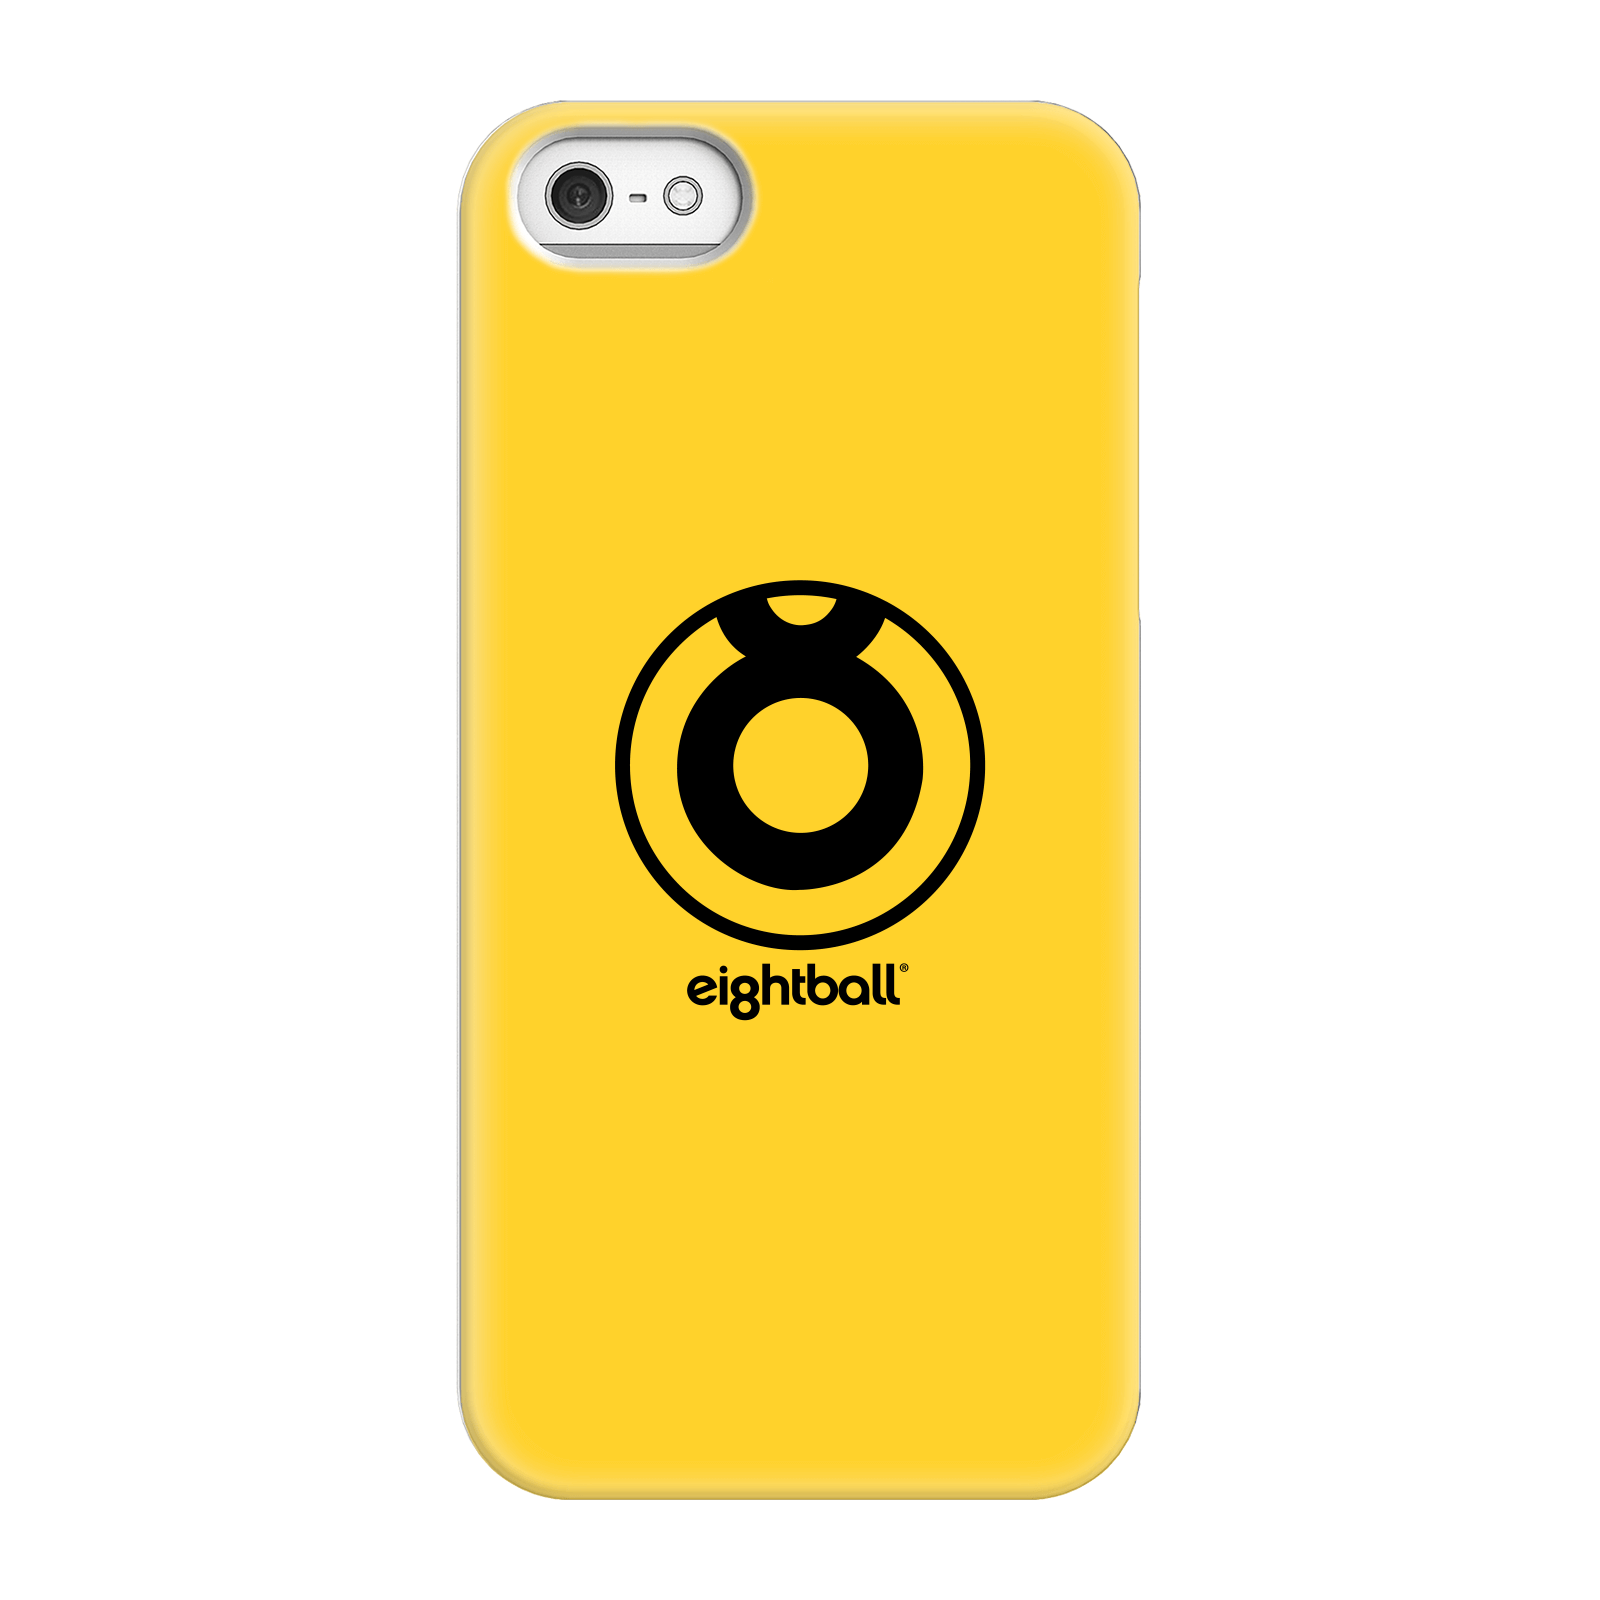 Funda Móvil Ei8htball Large Circle Logo para iPhone y Android - iPhone 5/5s - Carcasa rígida - Brillante